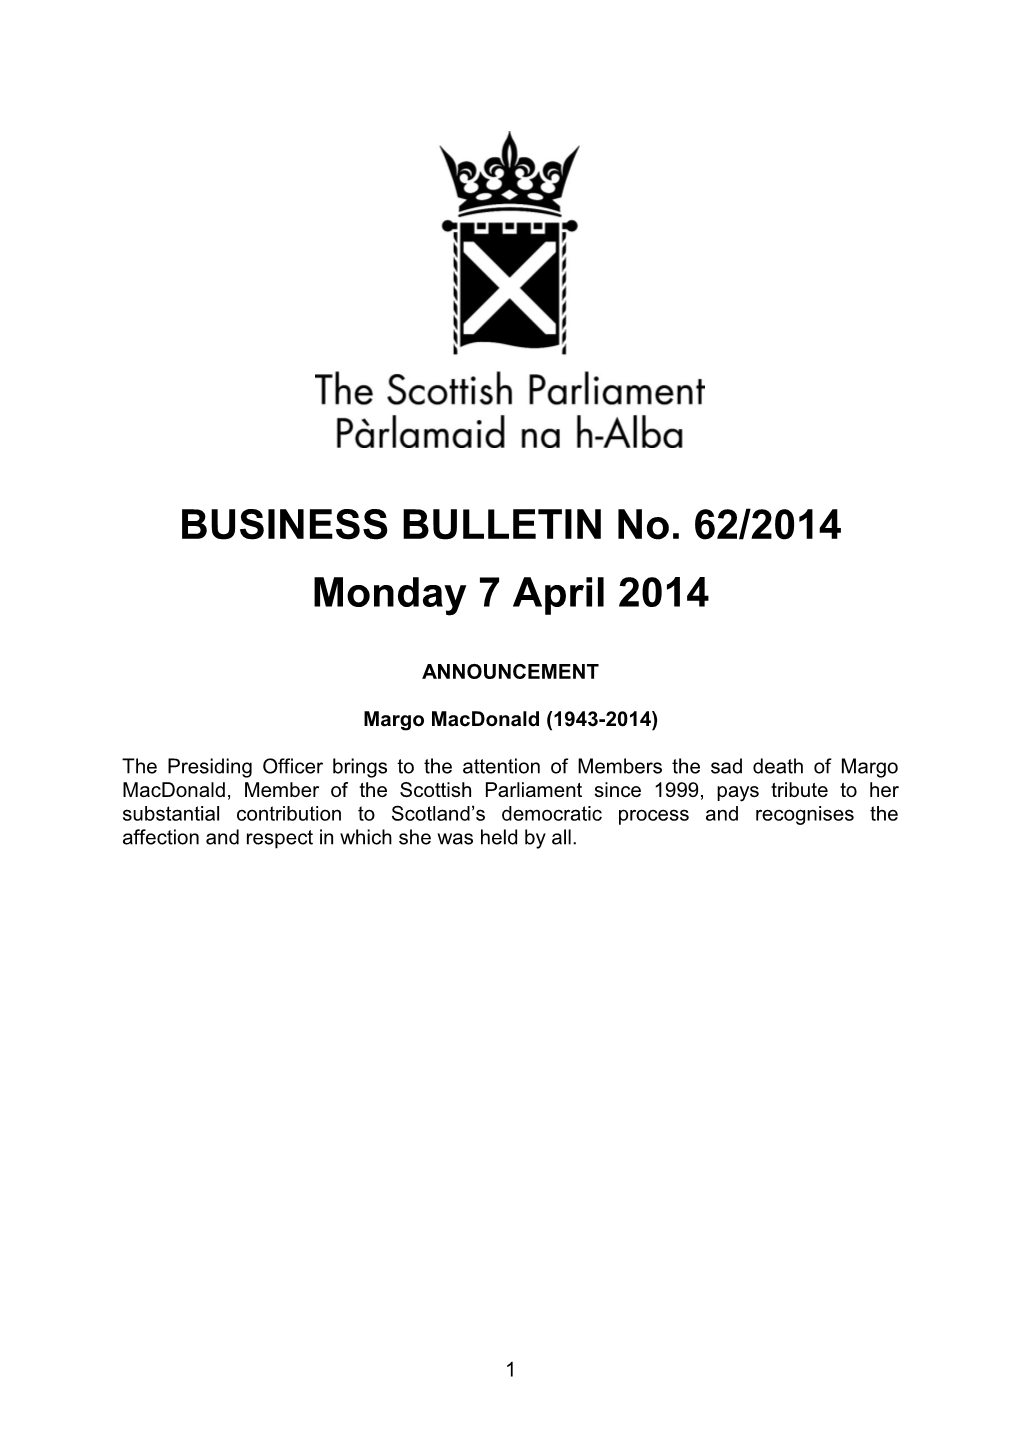 BUSINESS BULLETIN No. 62/2014 Monday 7 April 2014